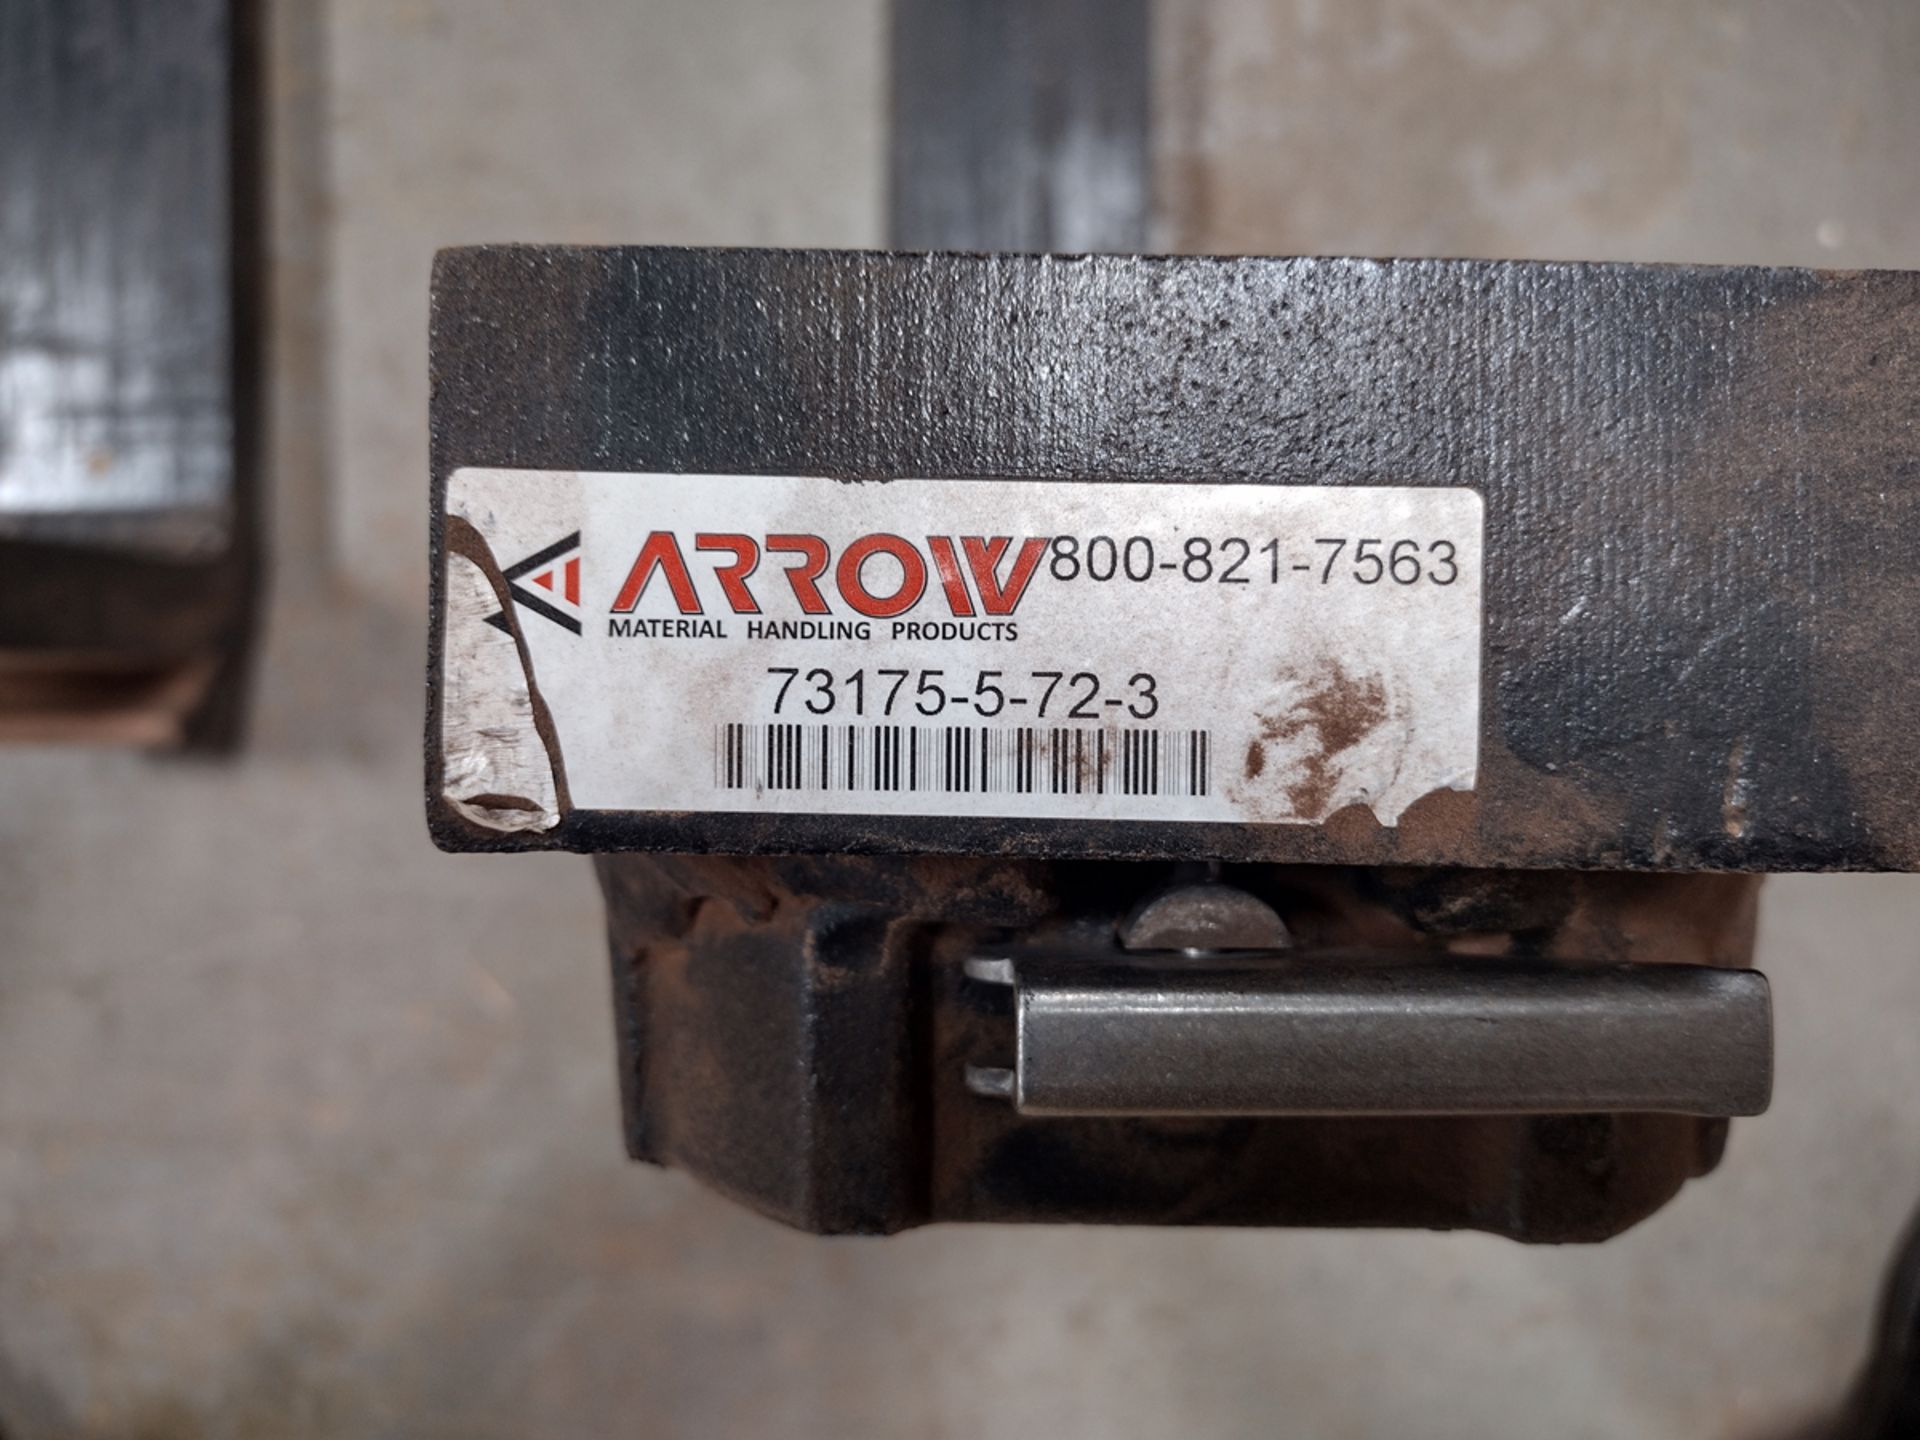 Arrow Heat Treated ITA Forklift Forks 72"x5" - Image 4 of 4